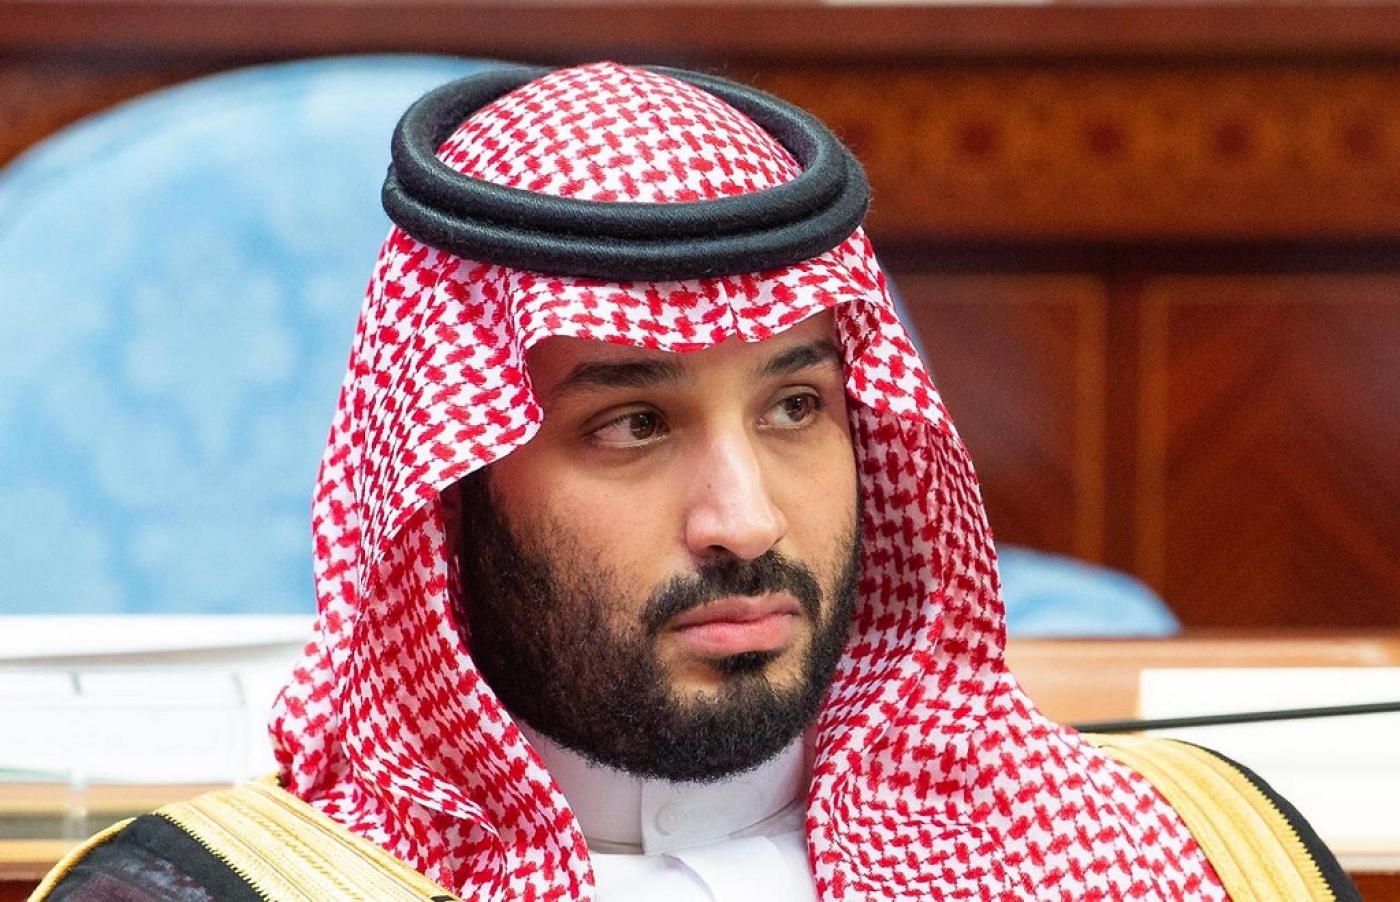 Crown Prince Mohammed bin Salman tried pressuring Saad al-Jabri into returning to Saudi Arabia